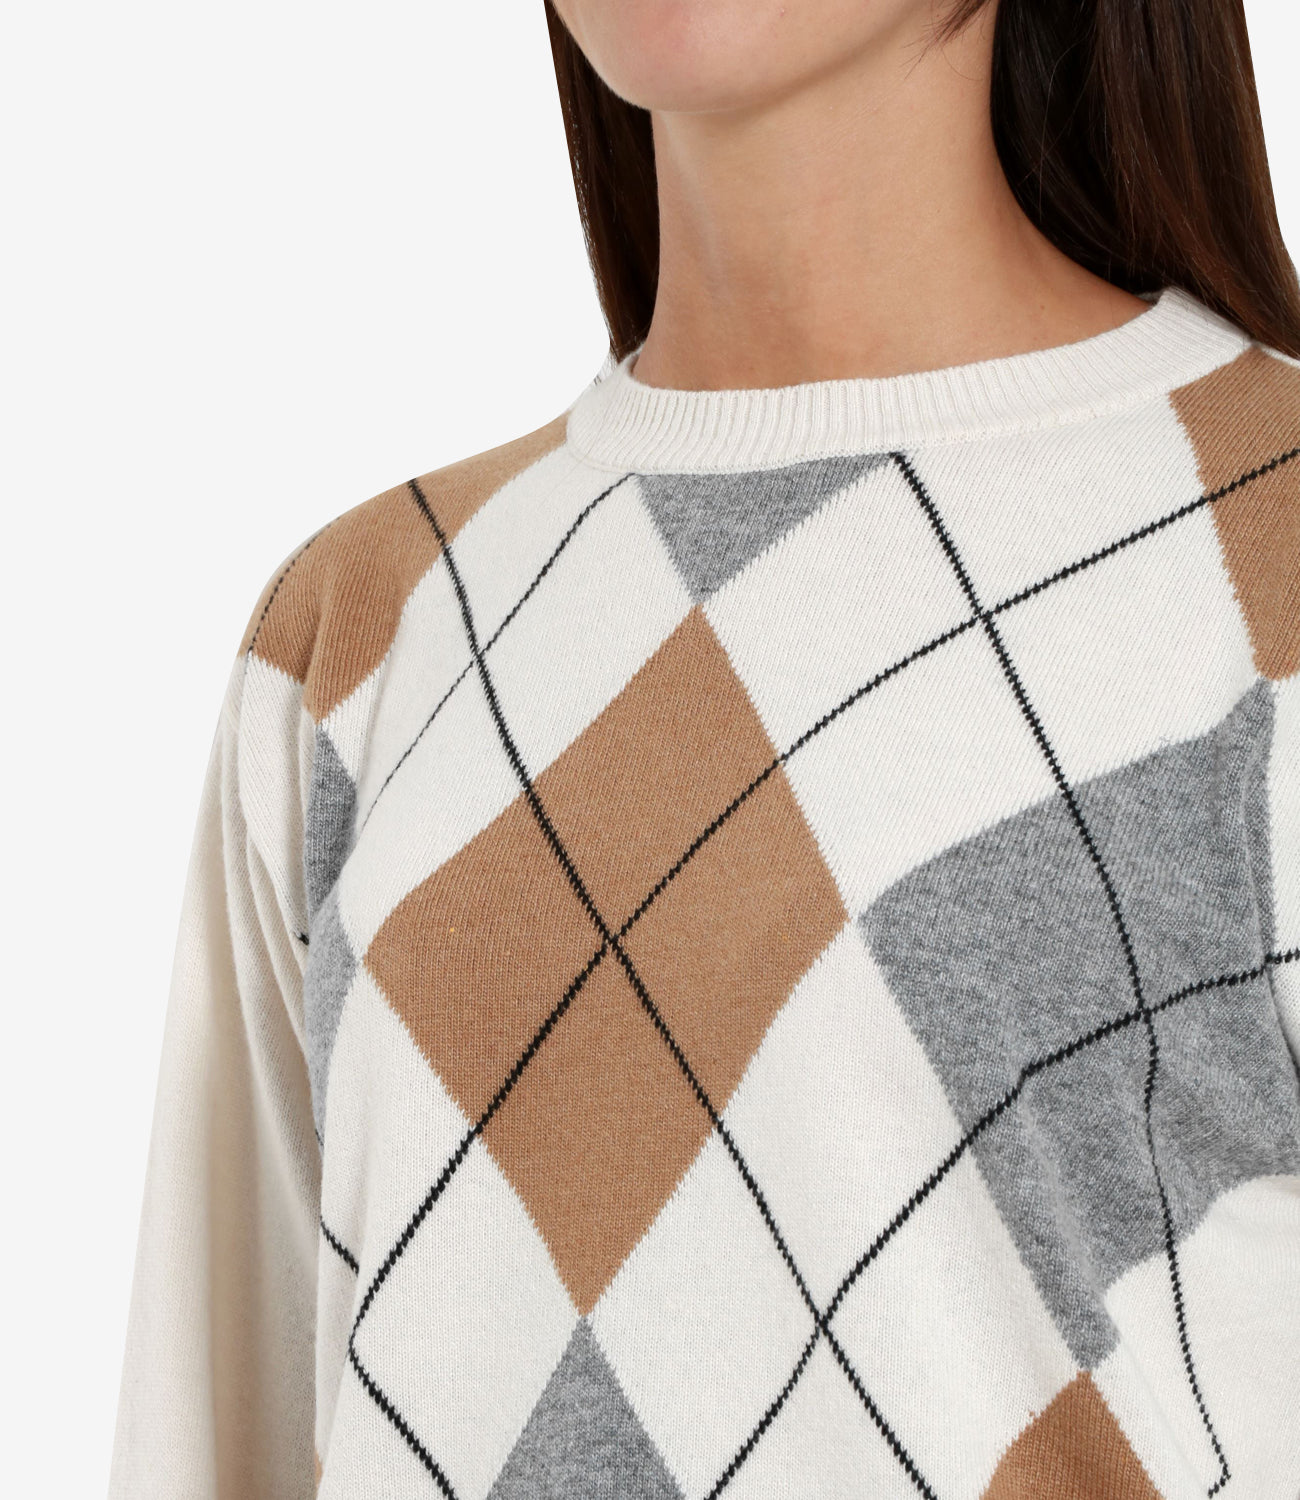 Kaos | Sweater Color Cream